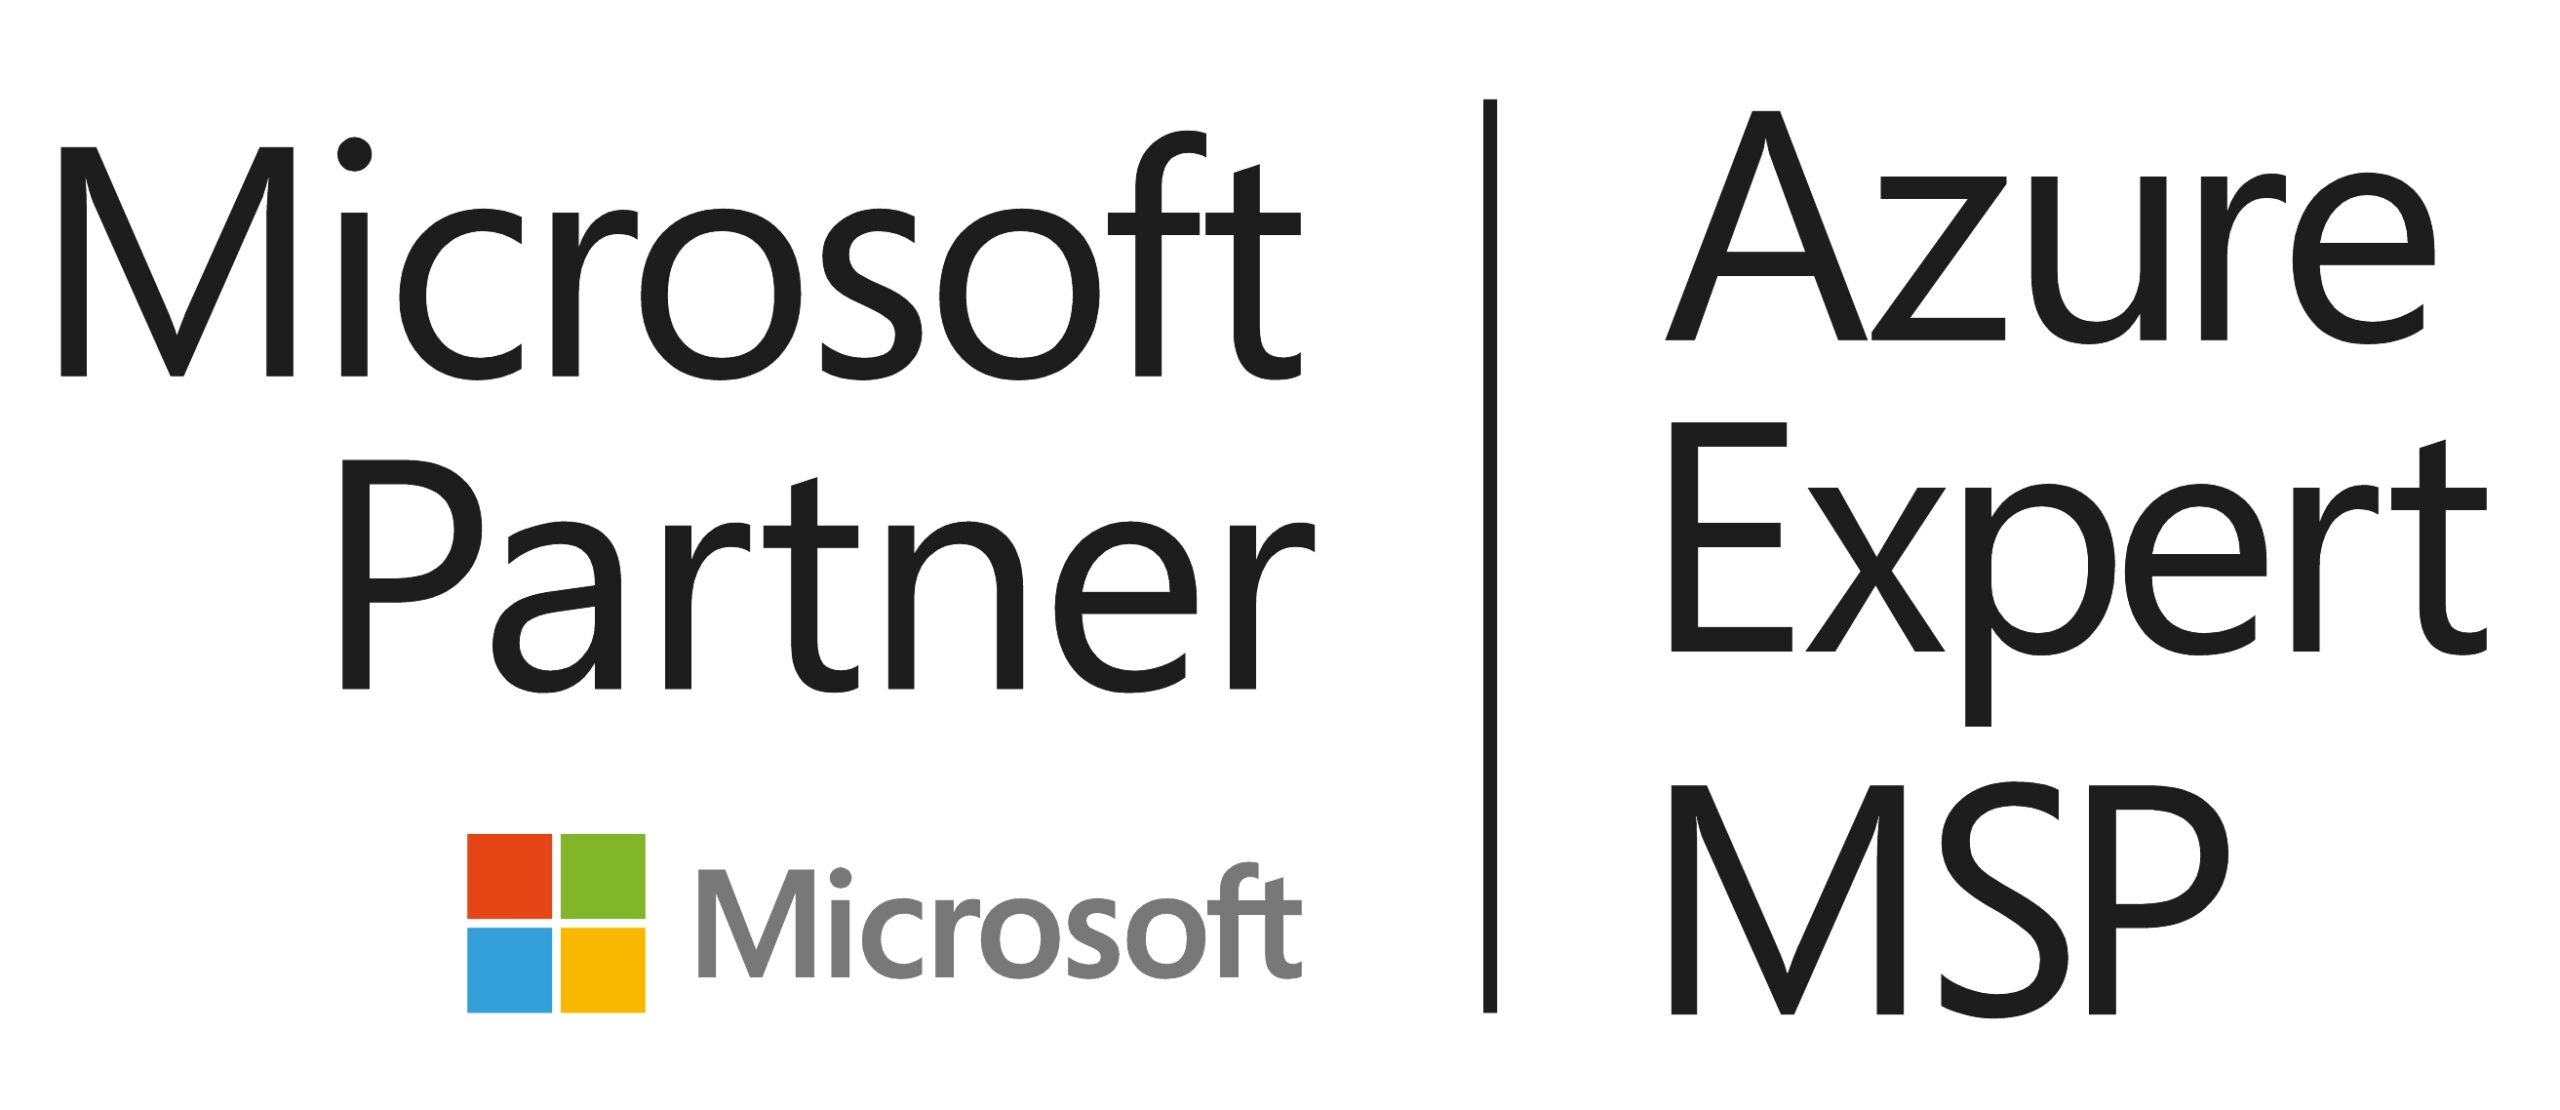 Microsoft Partner | Azure Expert MSP